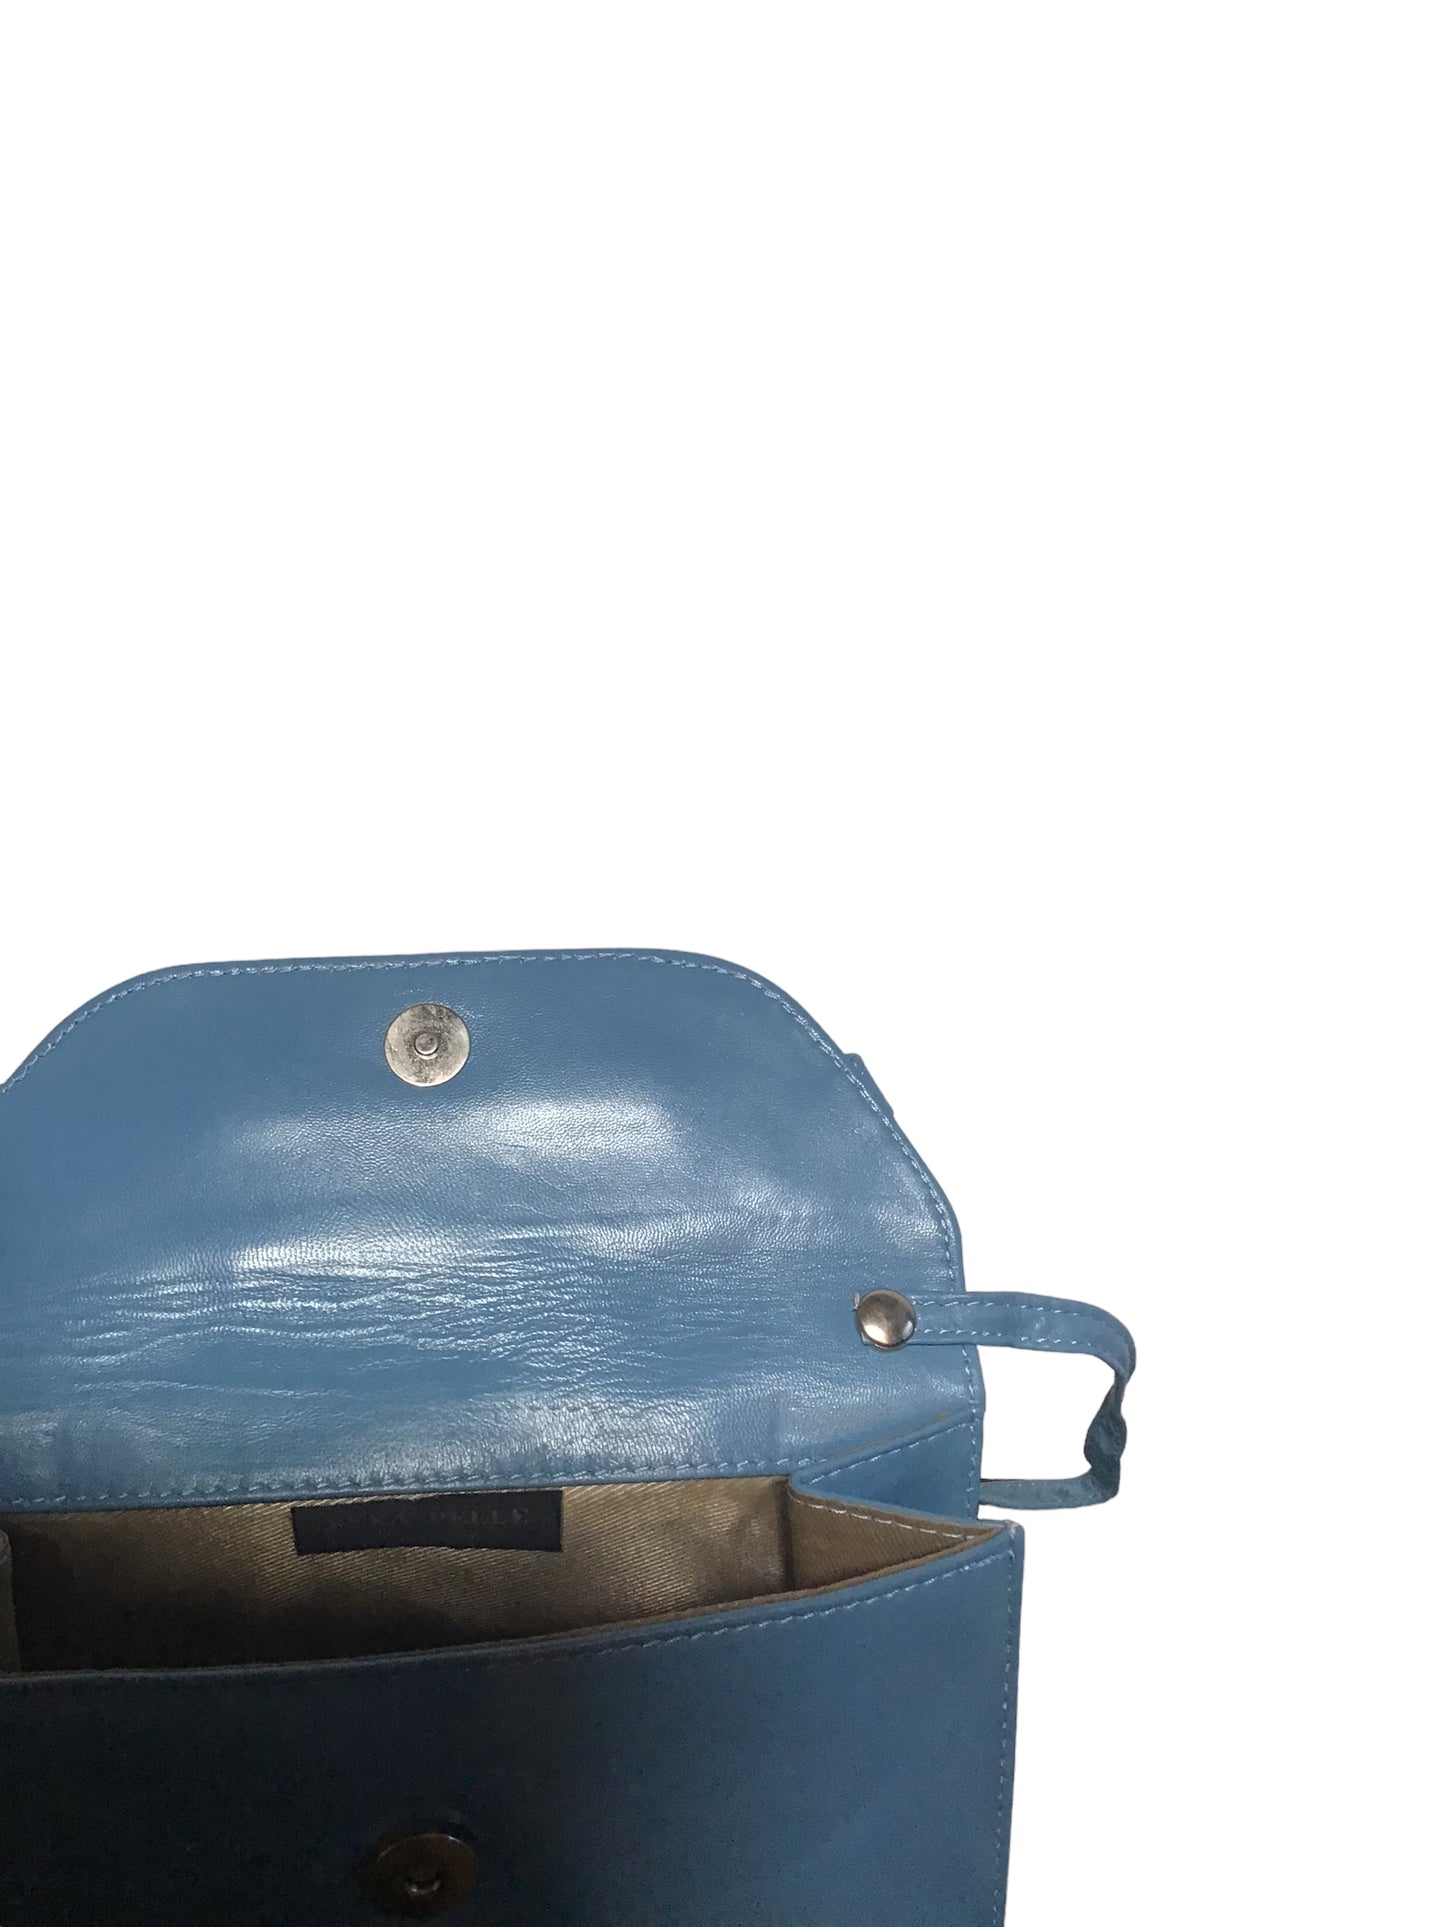 Vera Pelle Blue Bag (W23x14cm)